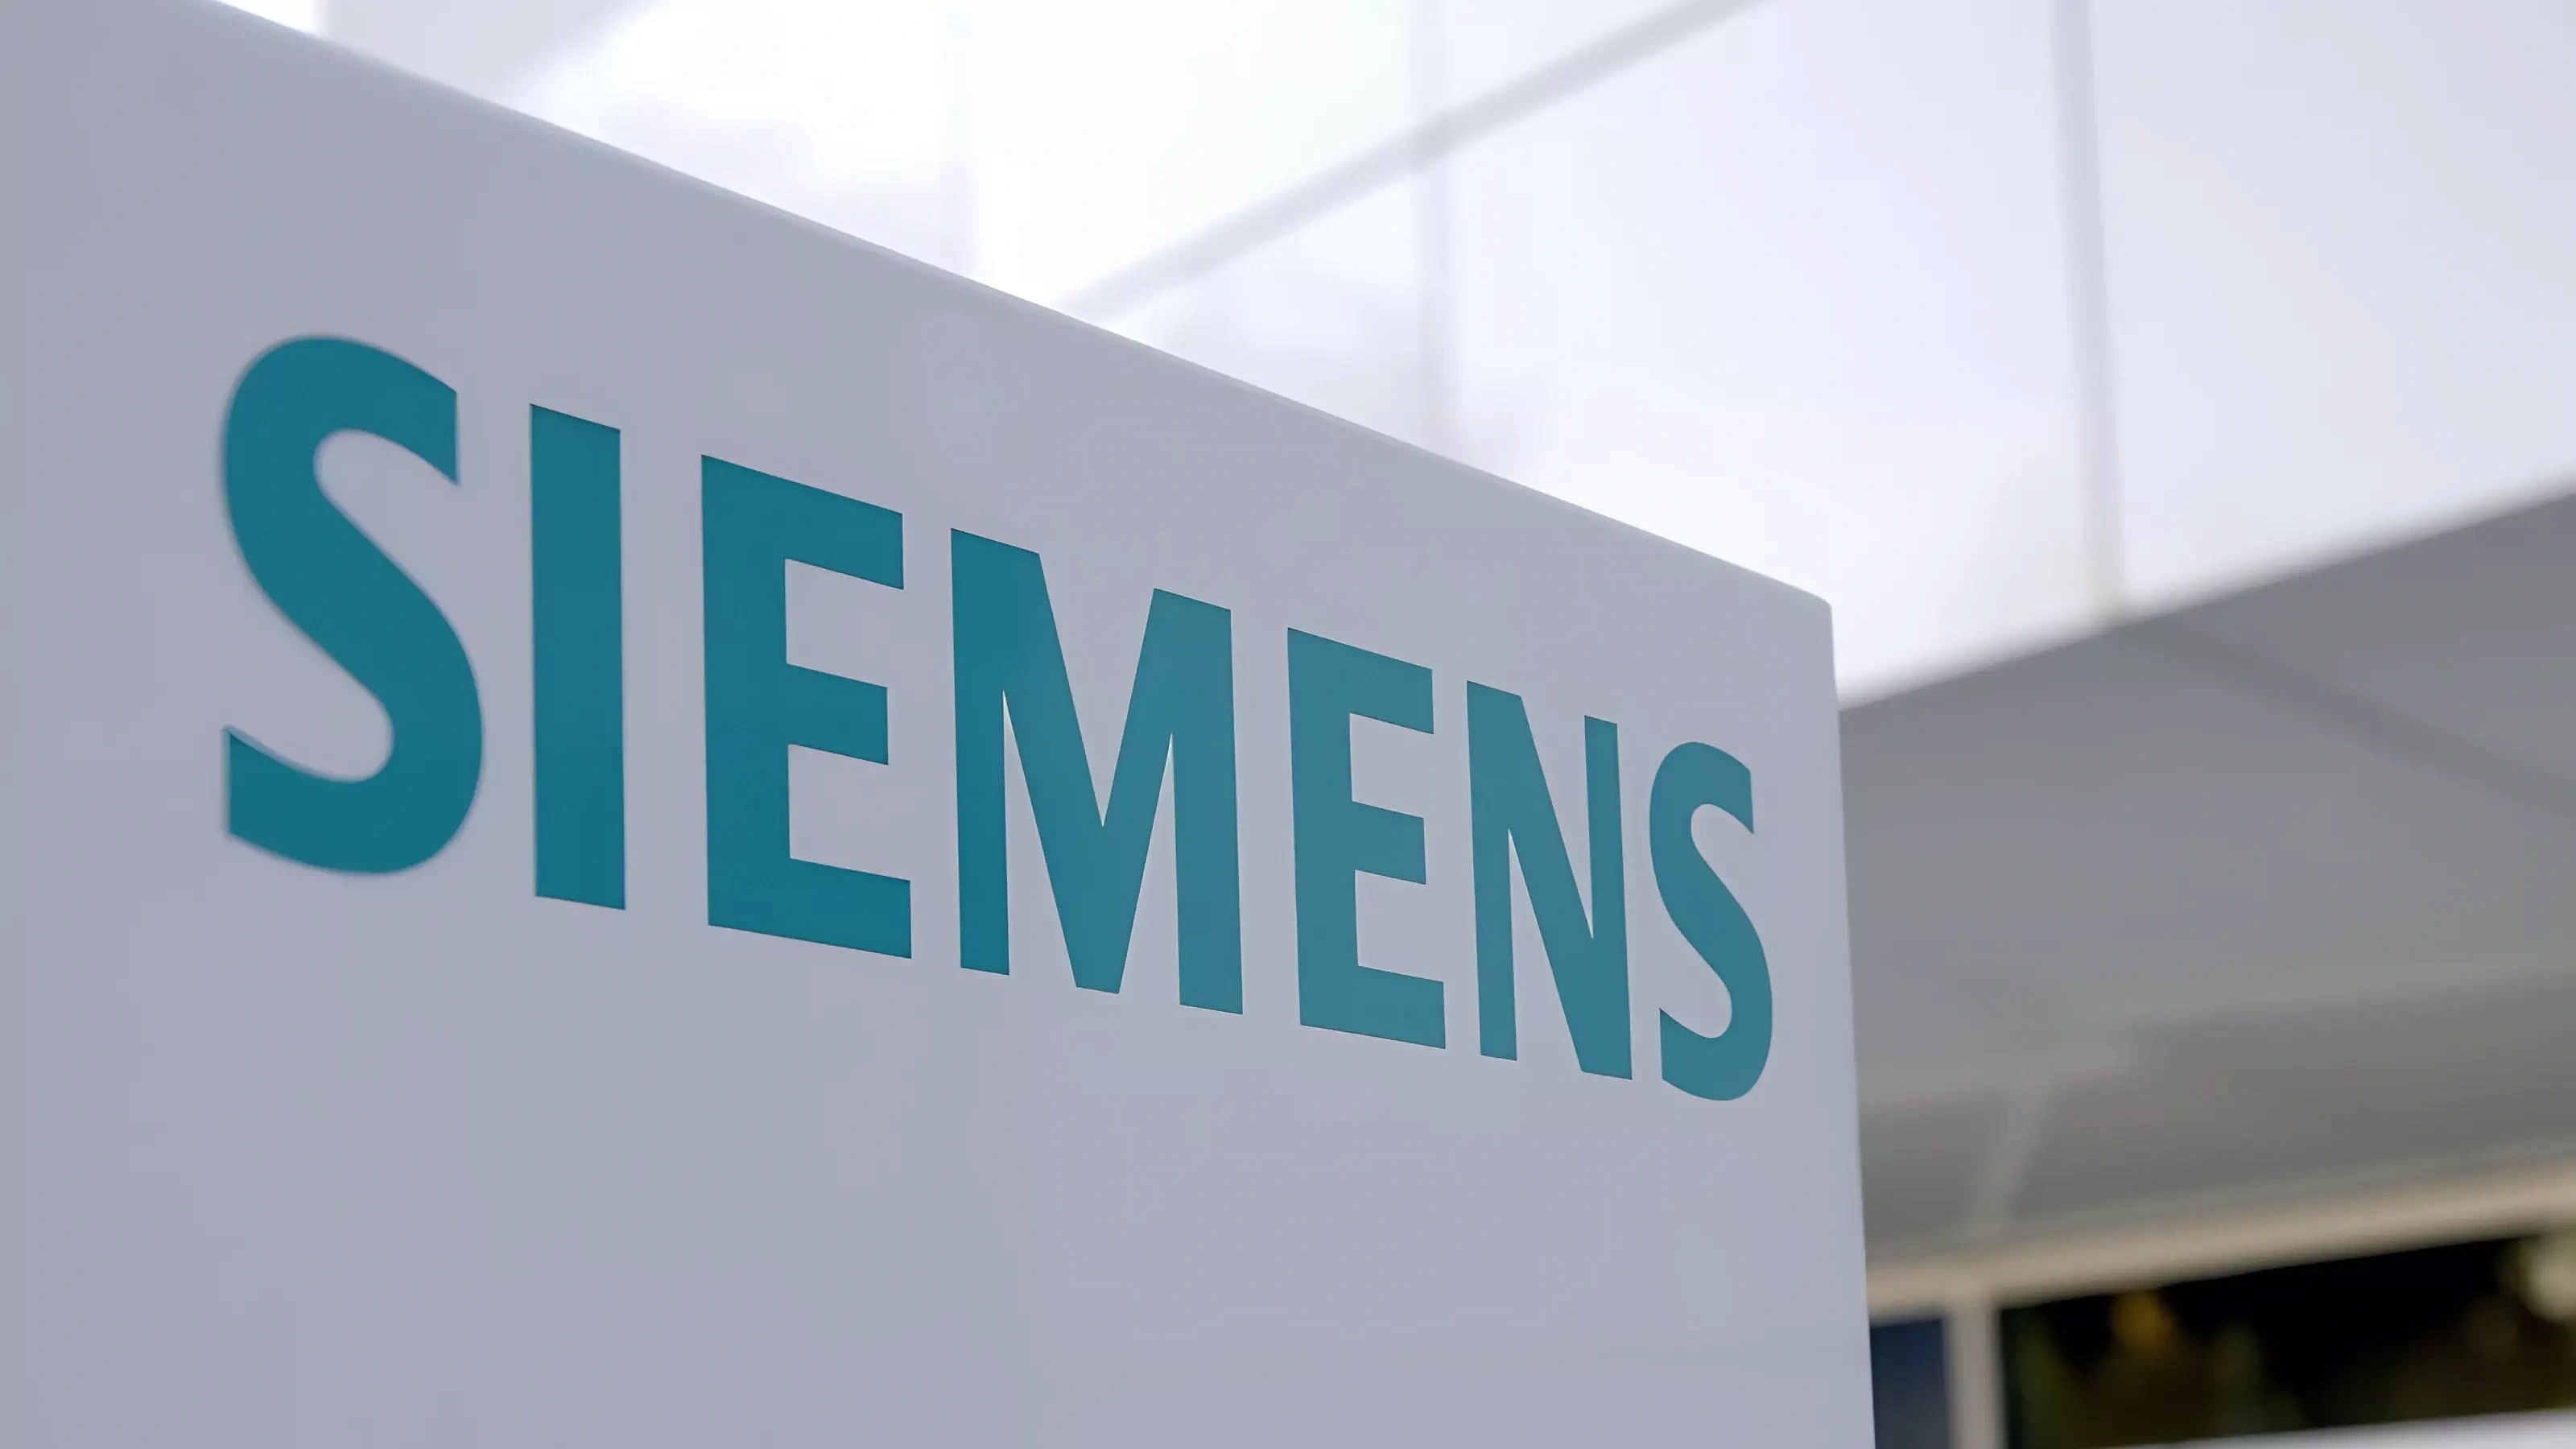      Siemens  600   